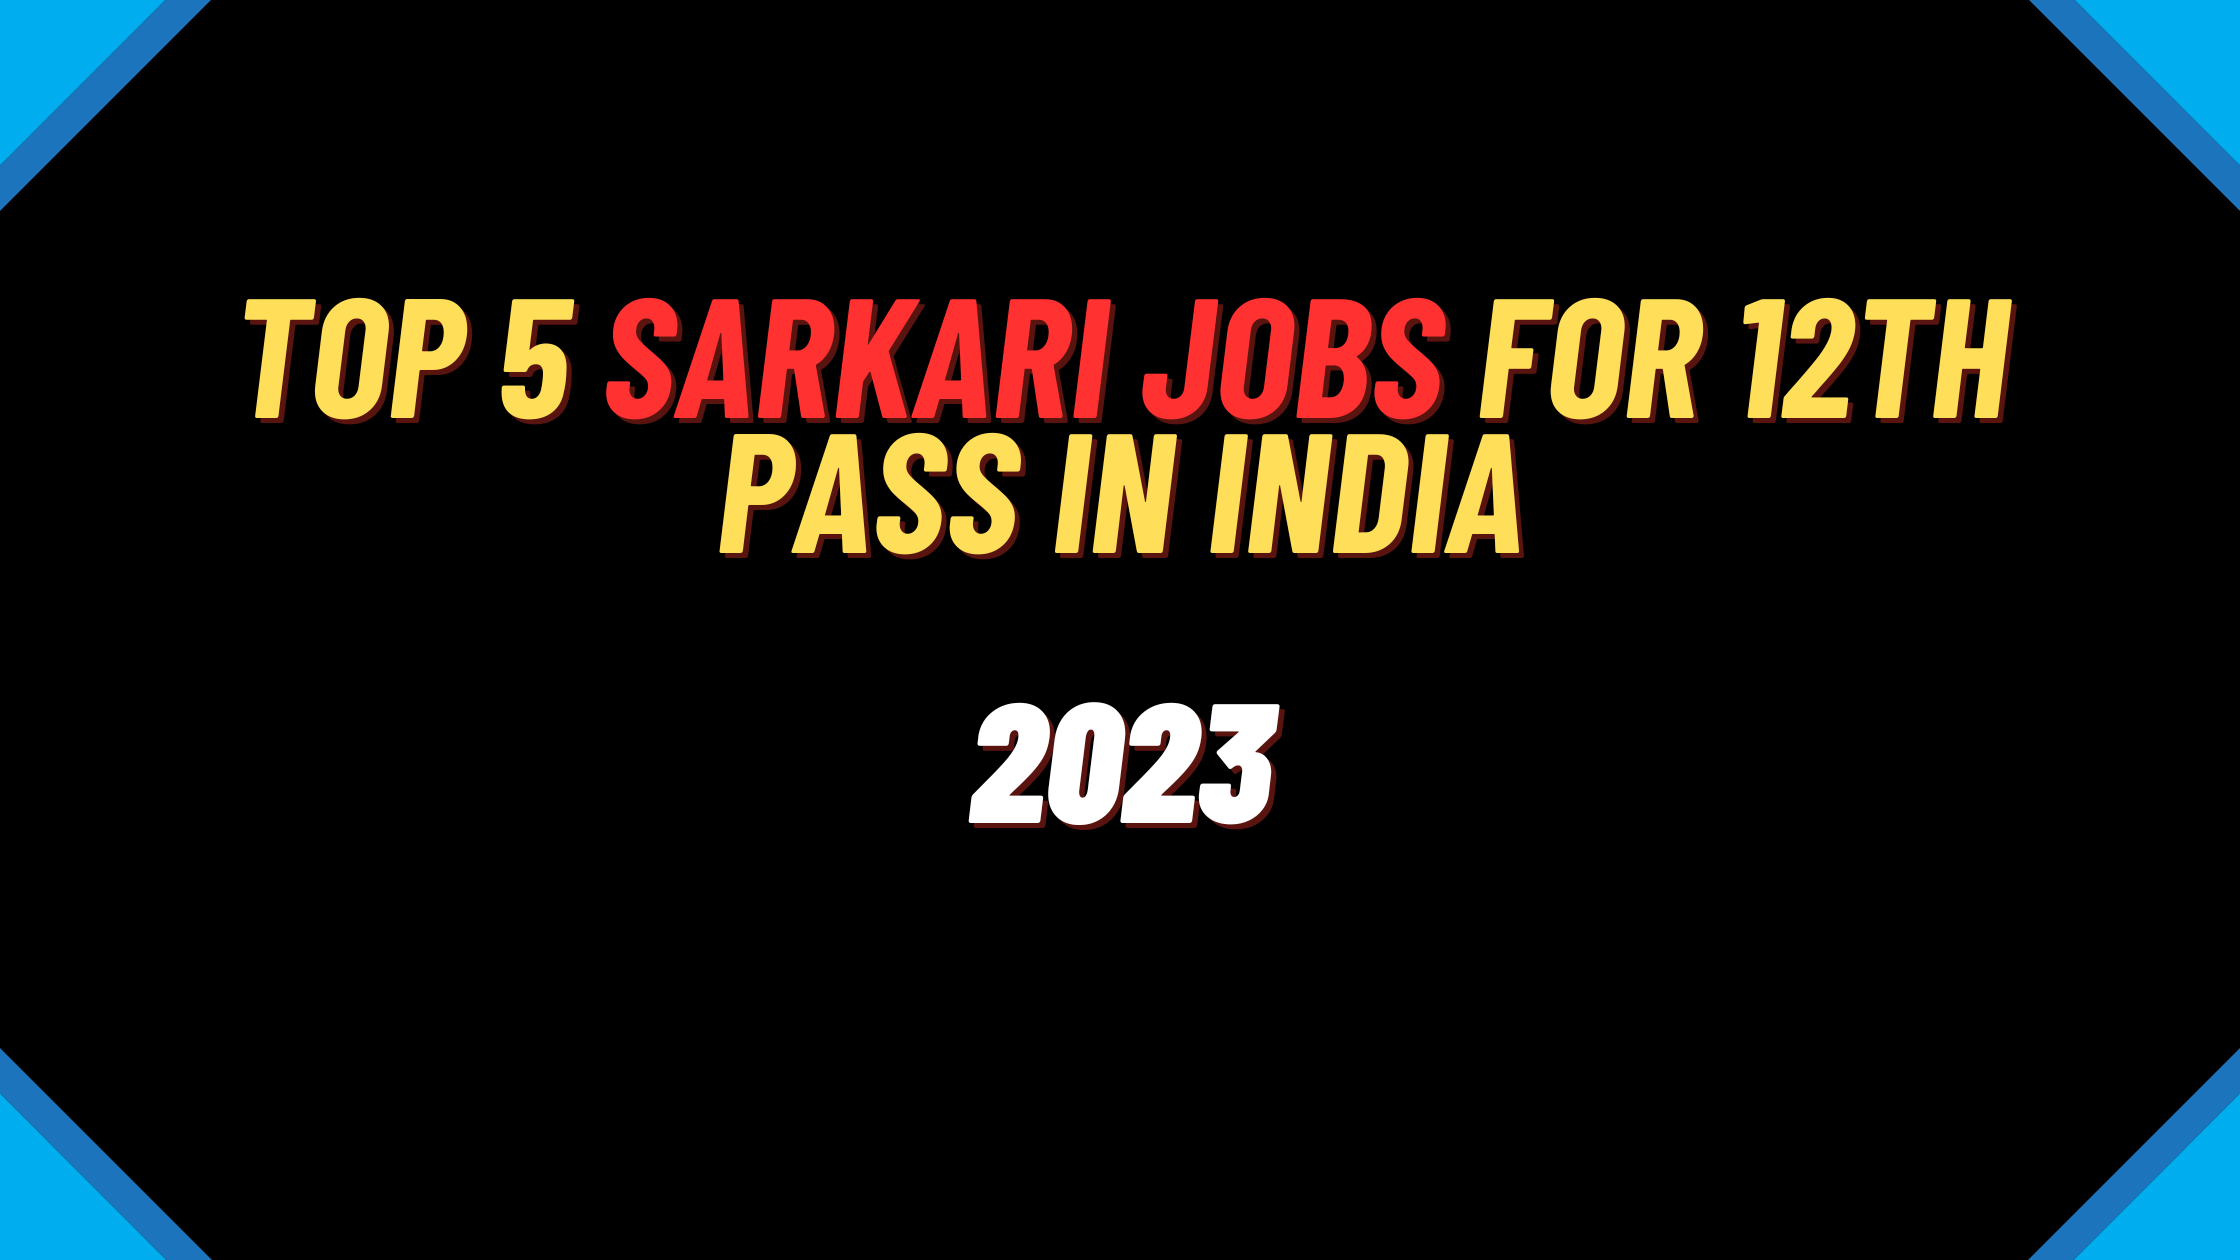 Top 5 Sarkari Jobs for 12th Pass in India